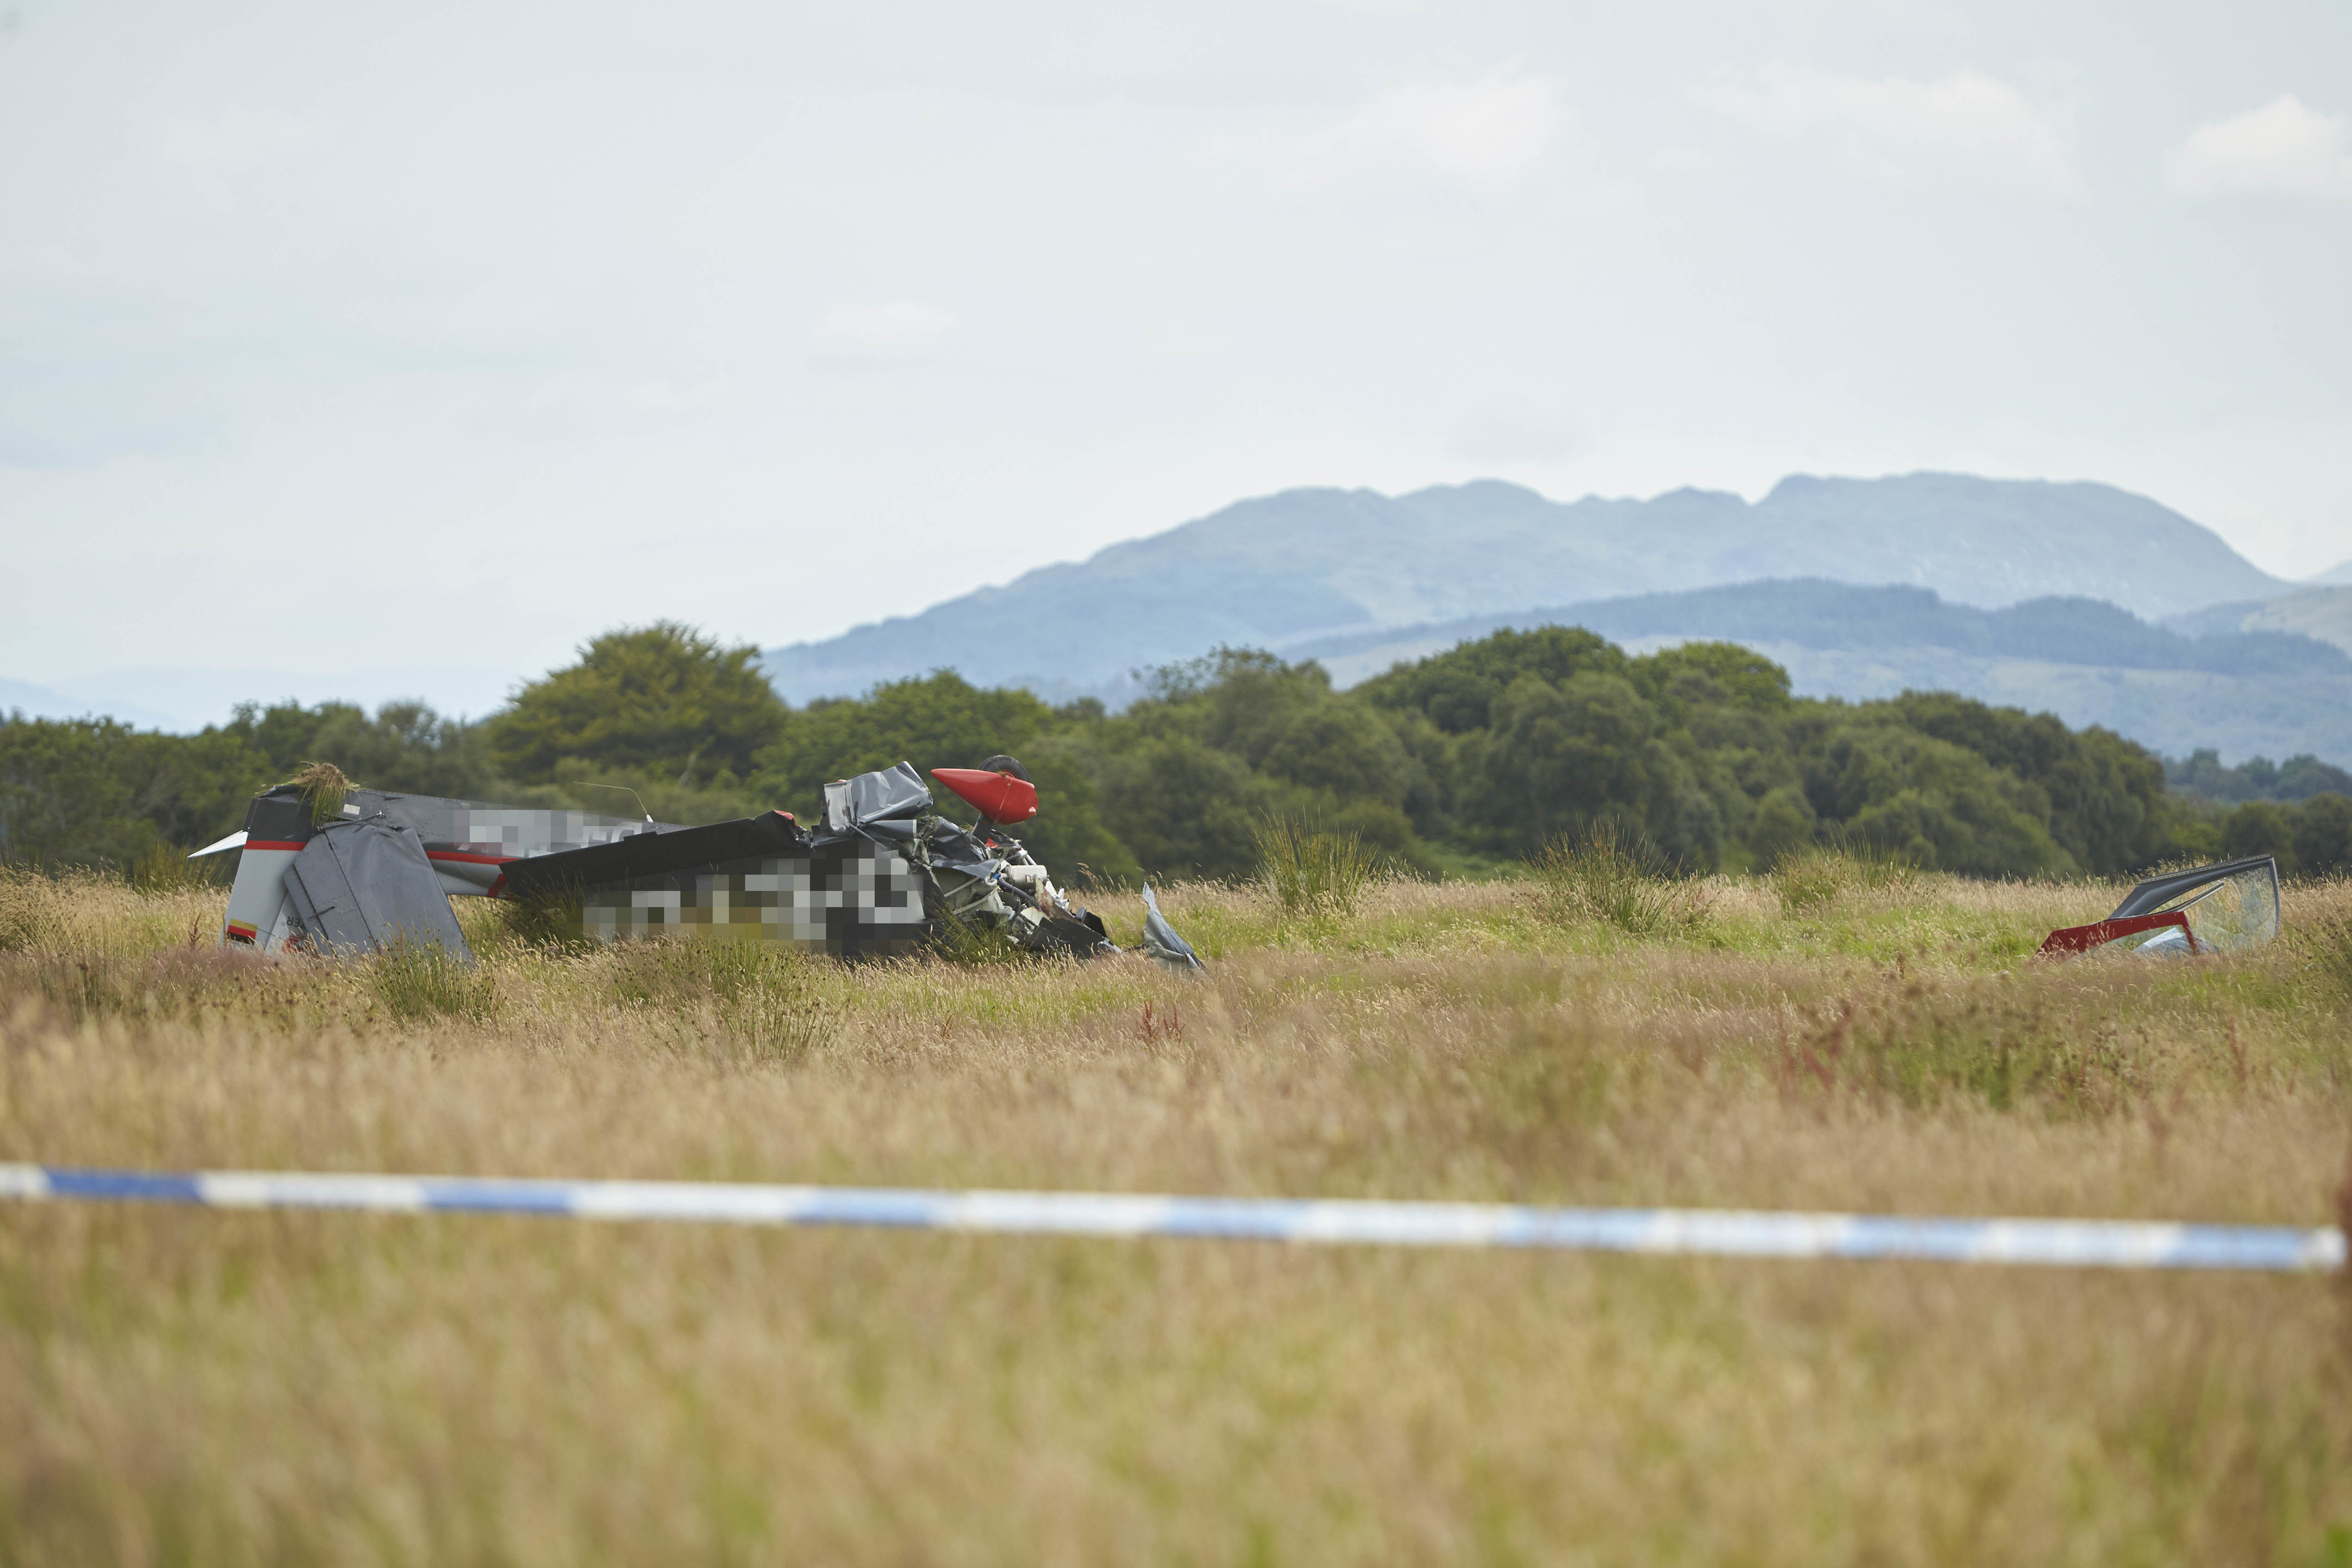 Crashed plane wreckage at Lochnell Estate in Argyll